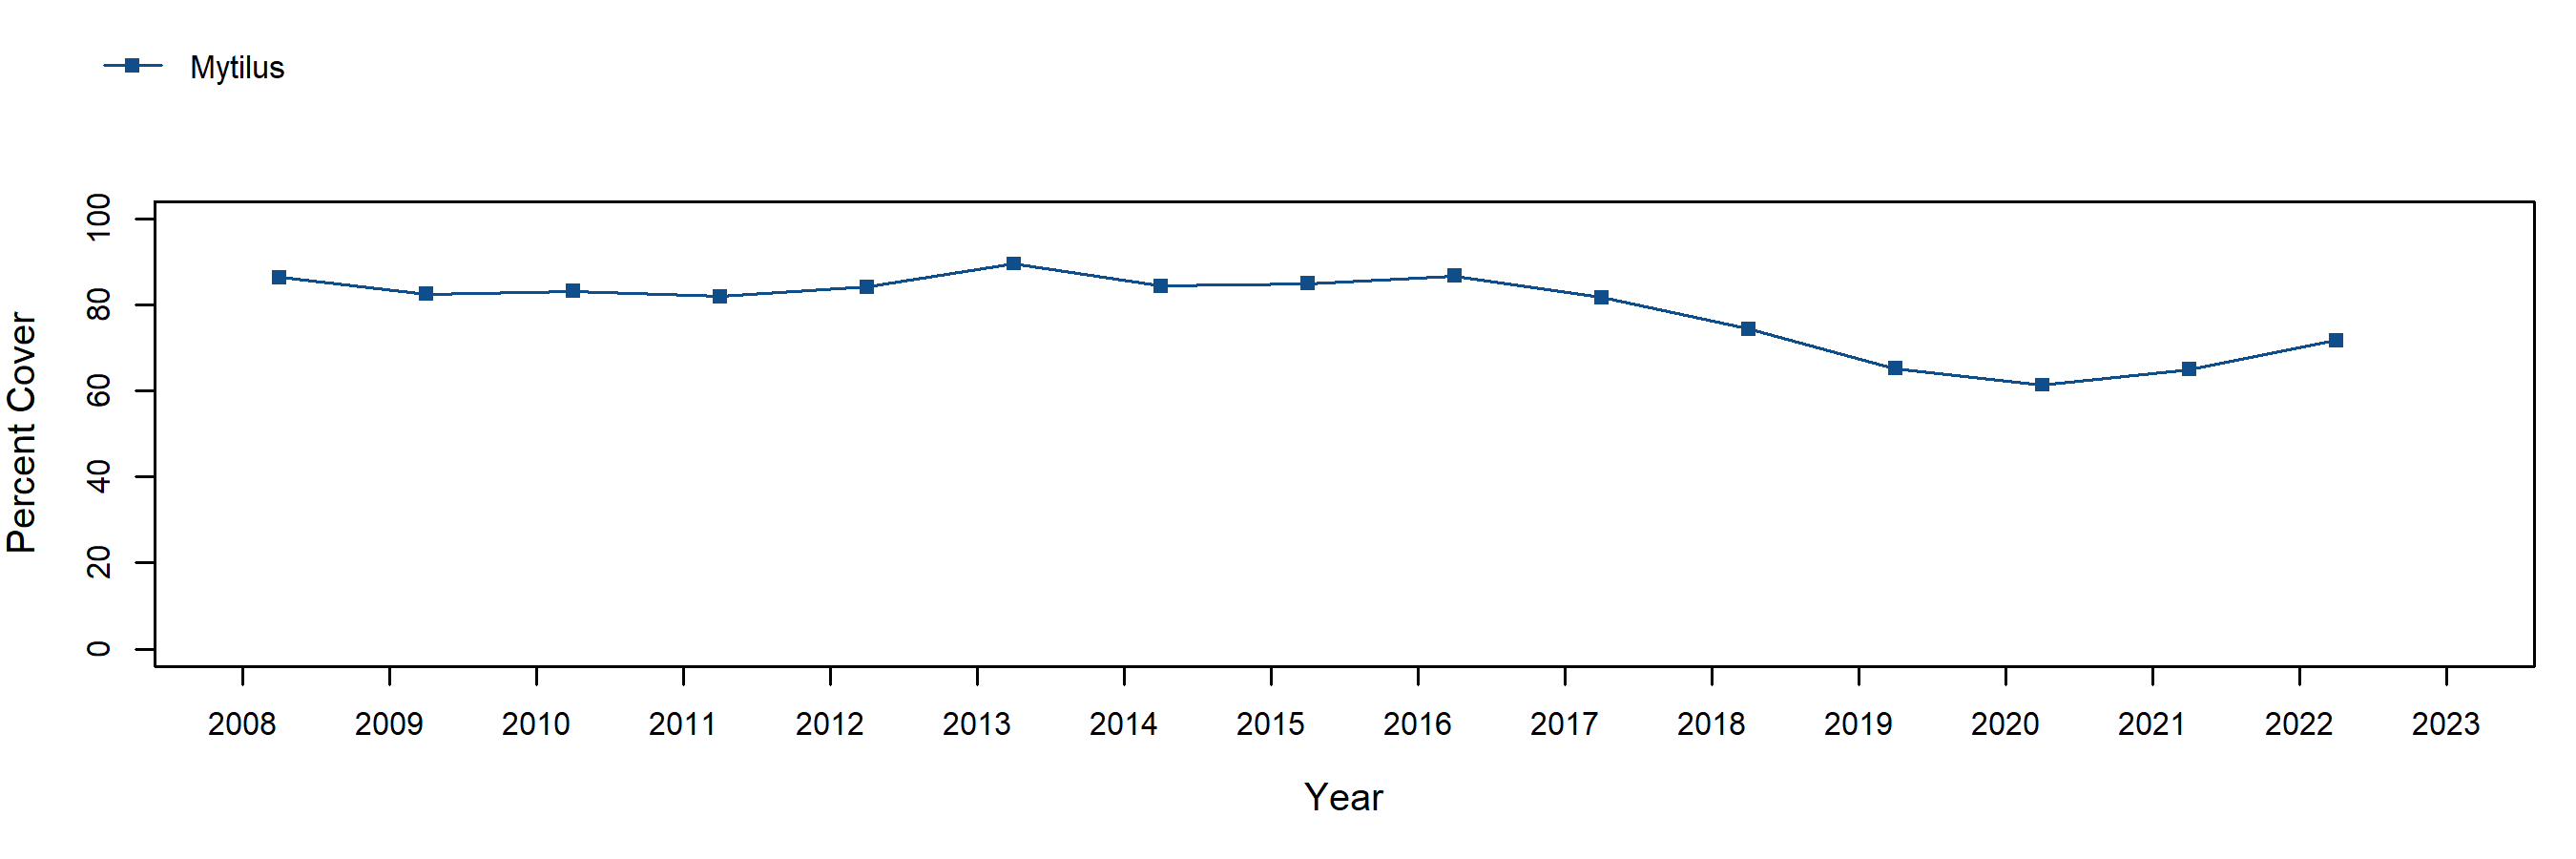 Taylor Point Mytilus trend plot